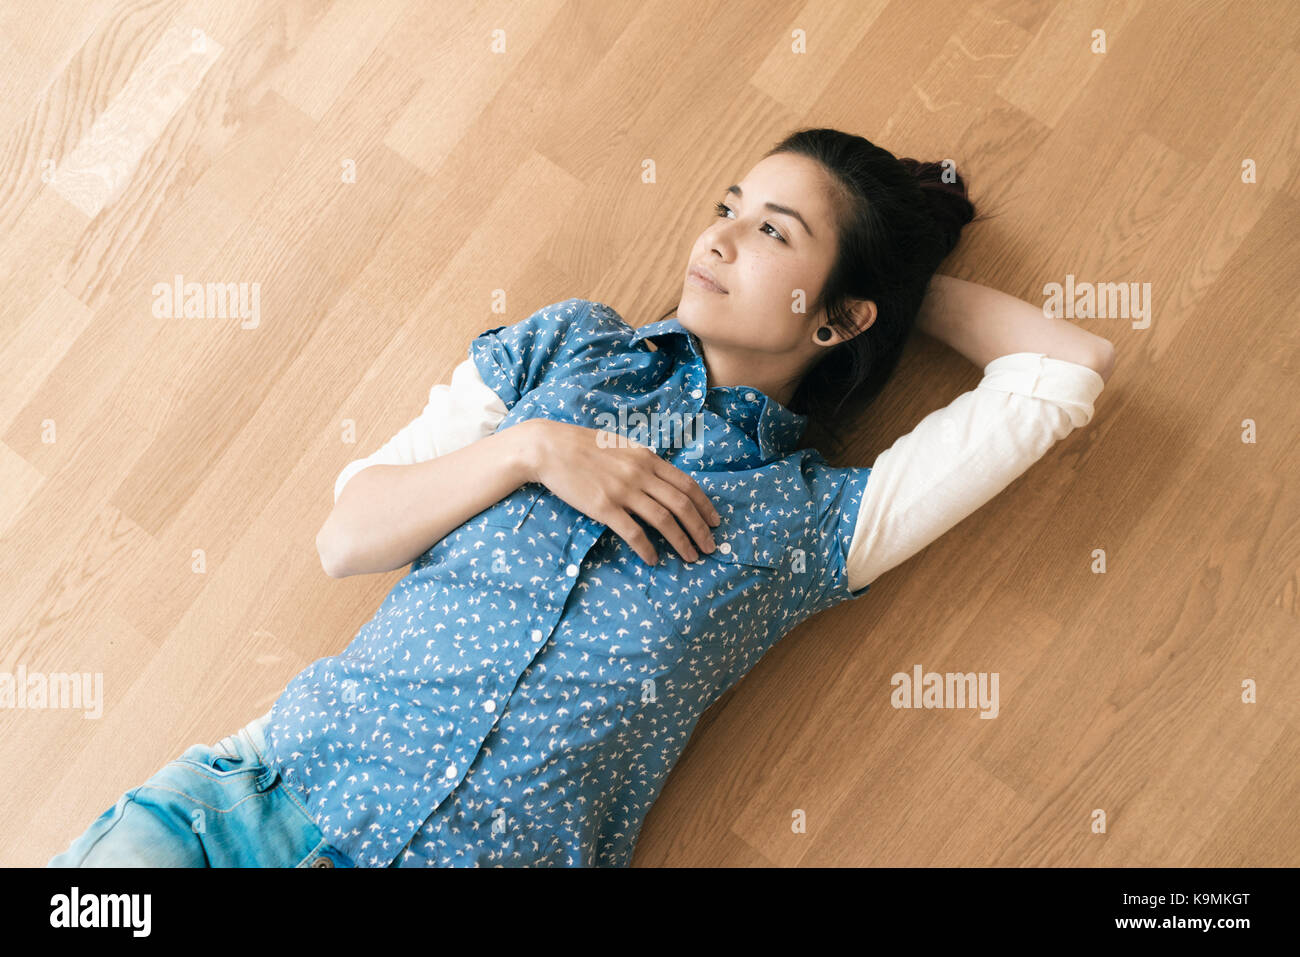 Woman lying on wooden floor Stock Photo